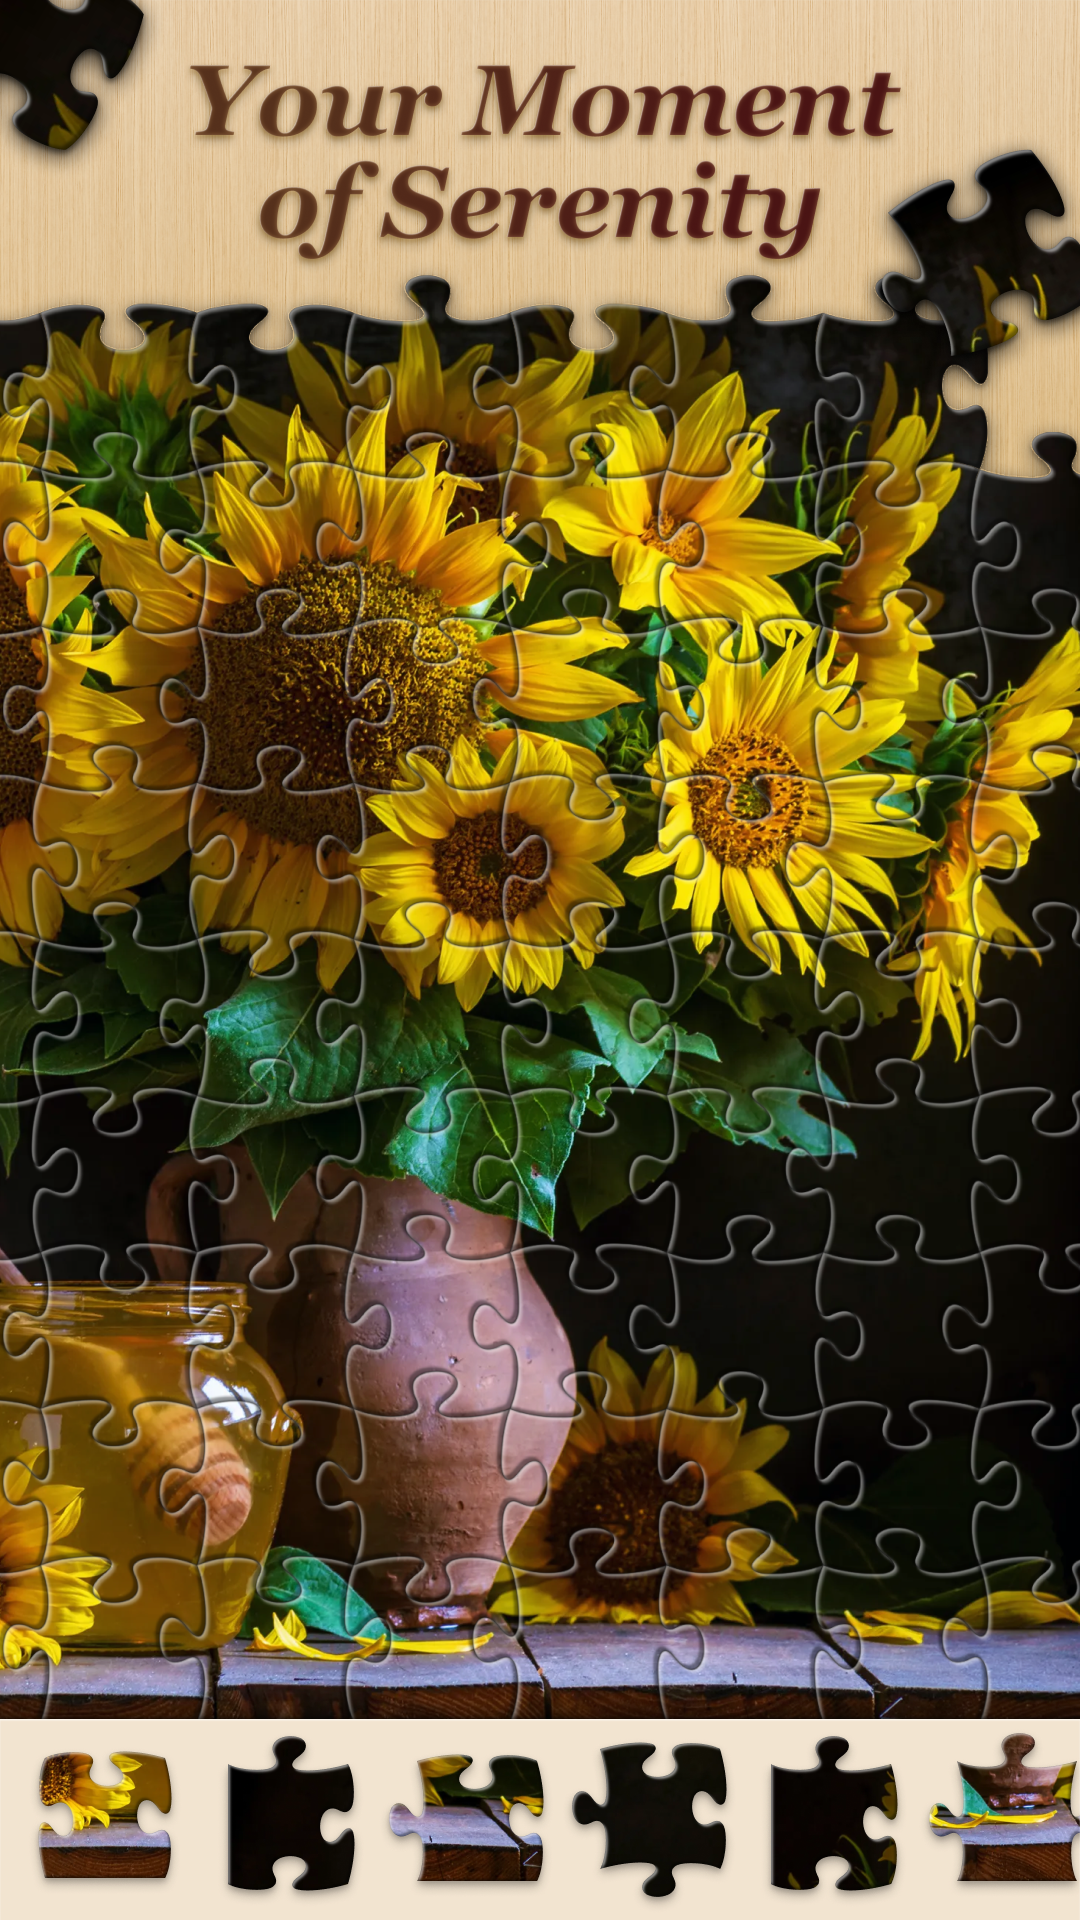 Jigsawscapes® - Jigsaw Puzzles screenshot game